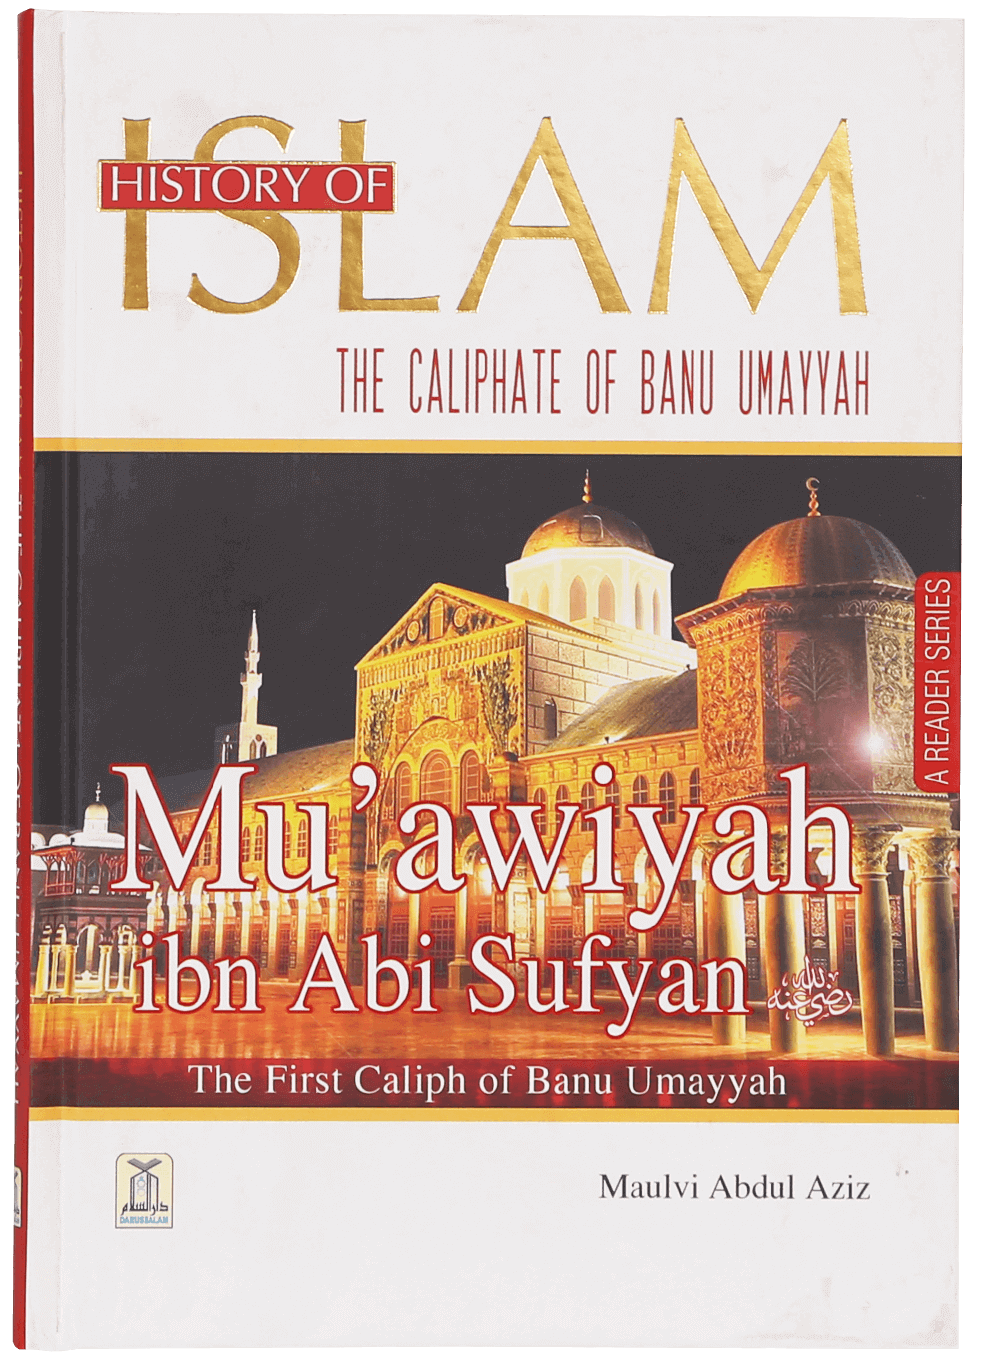 history-of-islam-muawiyah-ibn-abi-sufyan-darussalam-20180111-171635